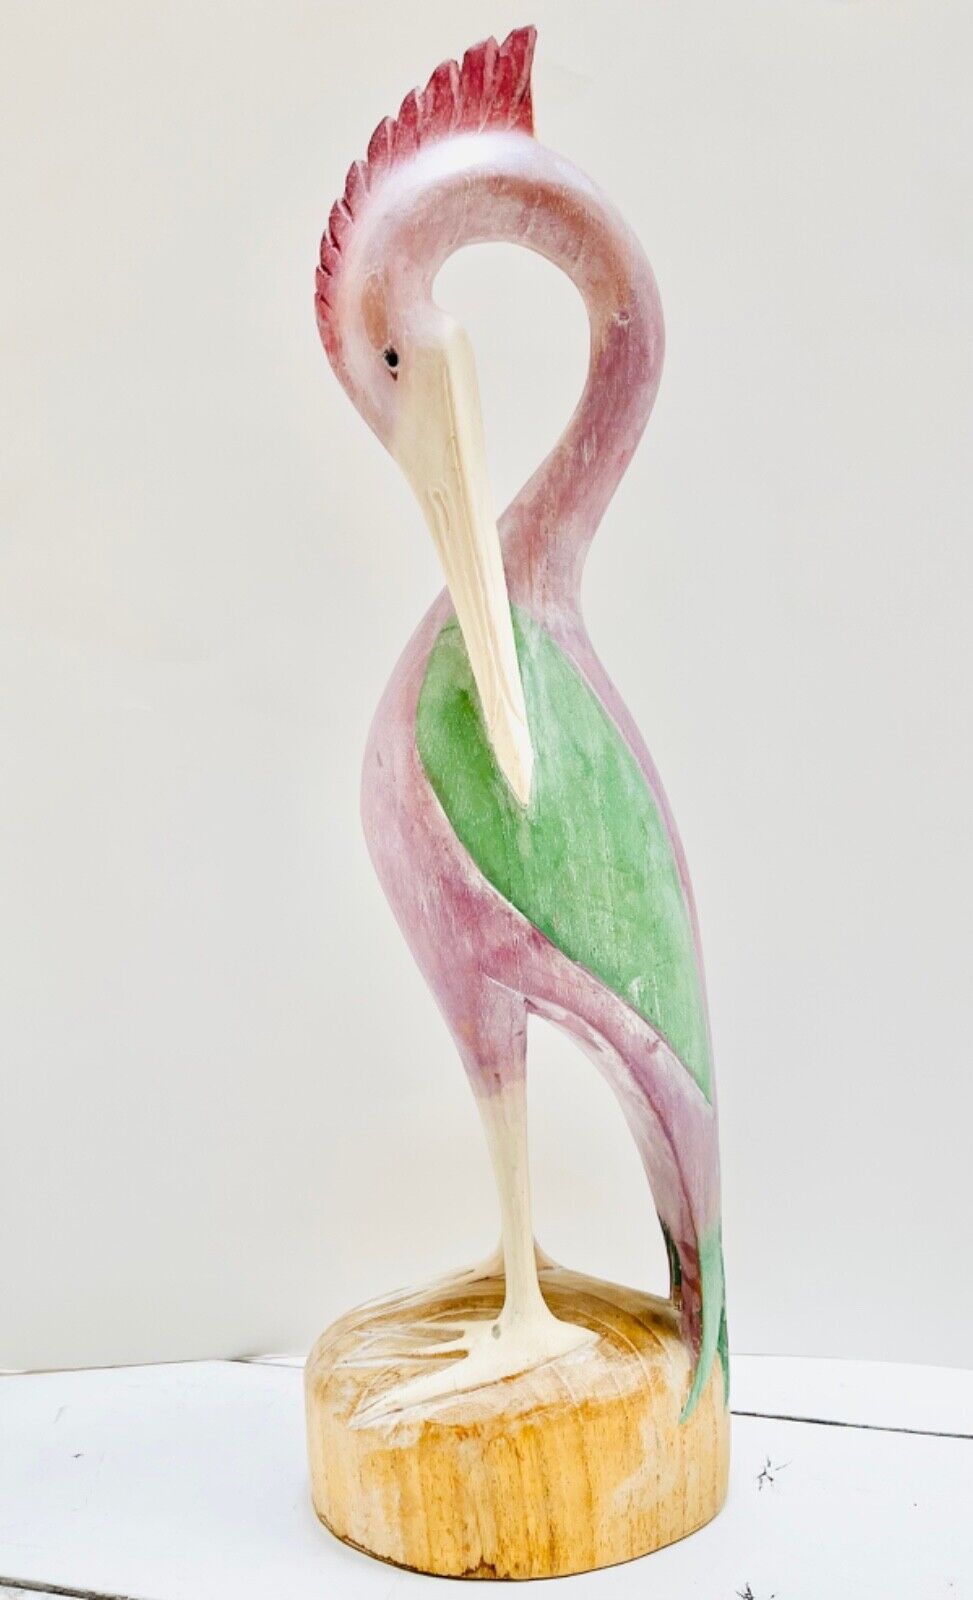 Rare Pier 1 Imports Wooden Painted Carved Heron Crane Bird Decor Sculpture